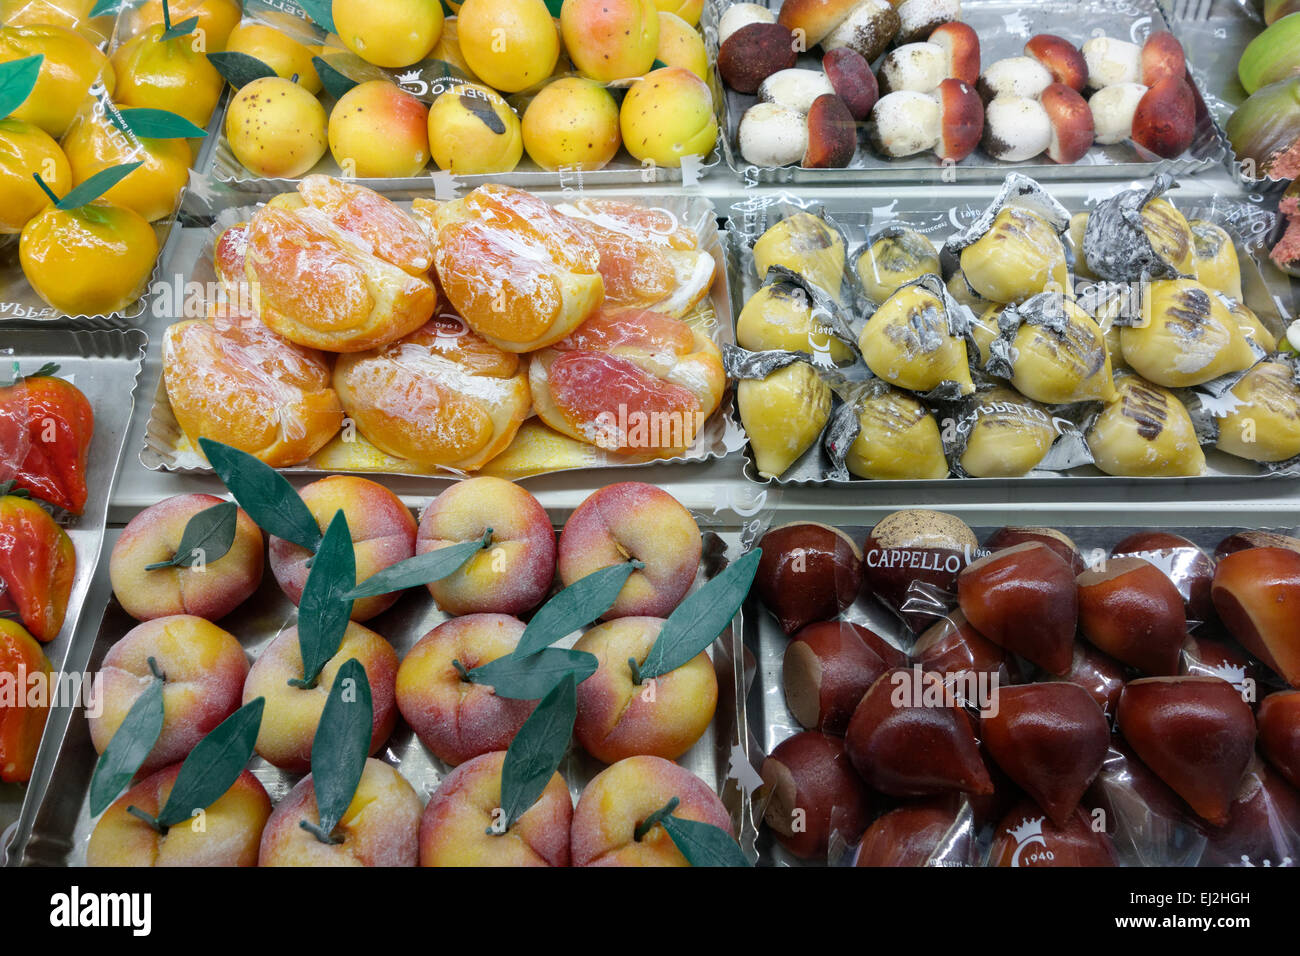 Marzipan fruit sicily -Fotos und -Bildmaterial in hoher Auflösung – Alamy